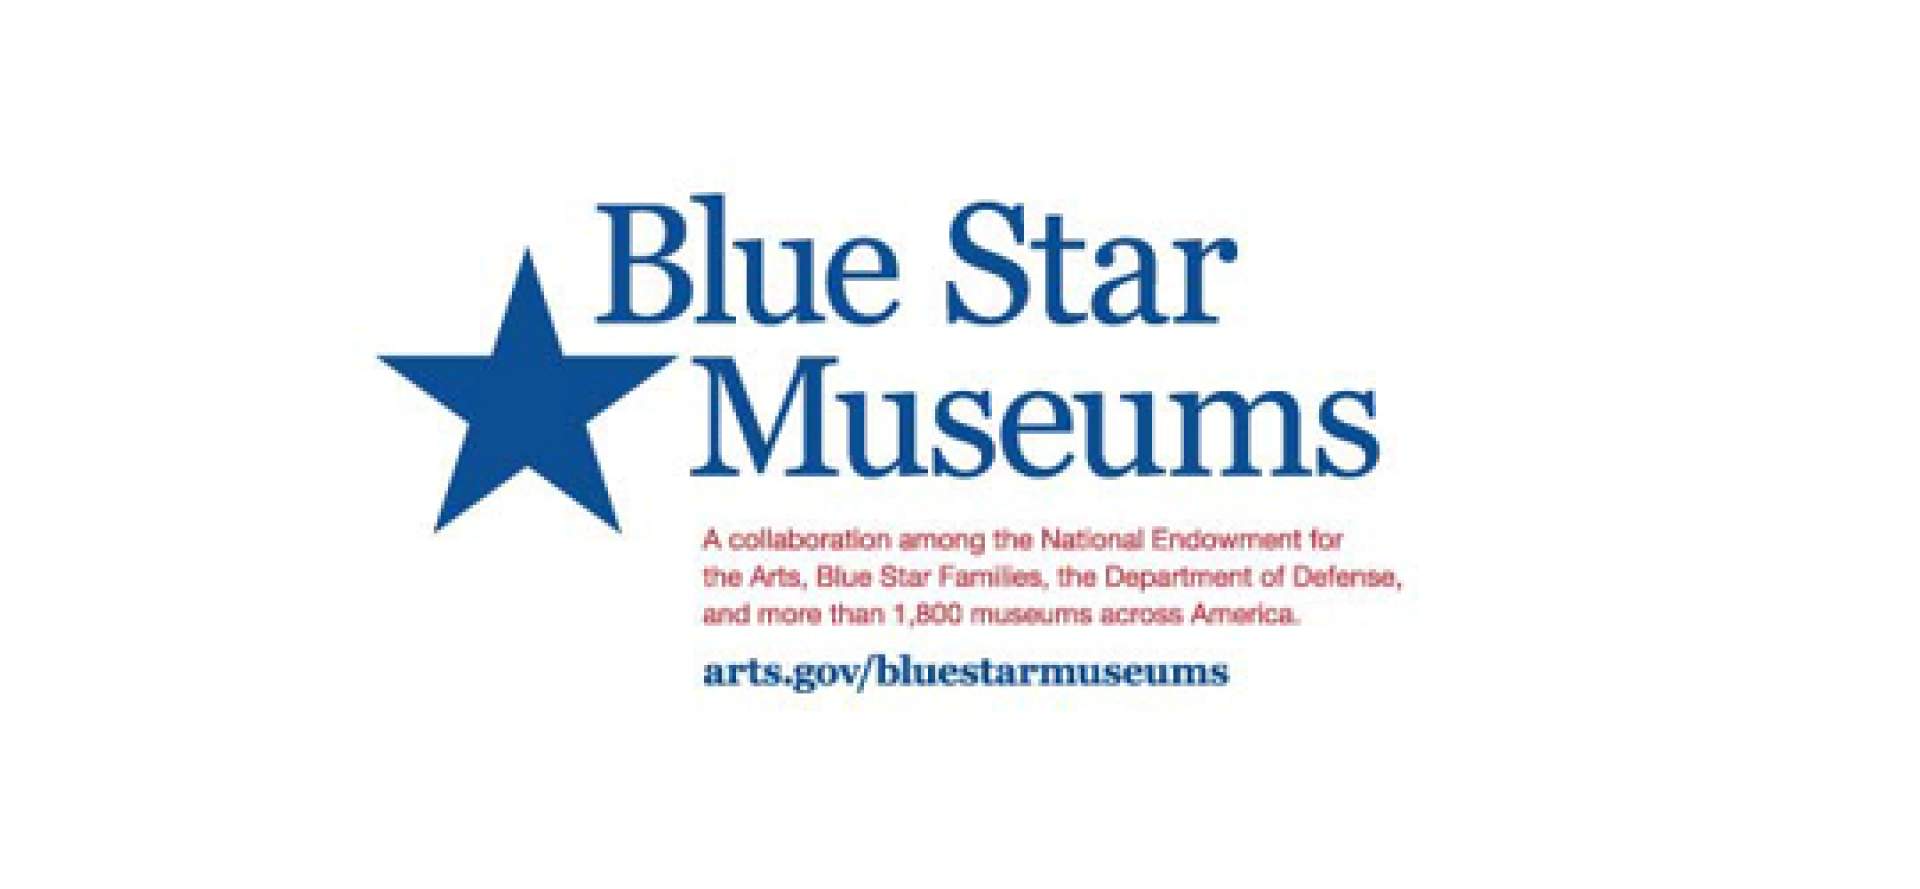 Burchfield Penney is a Blue Star Museum